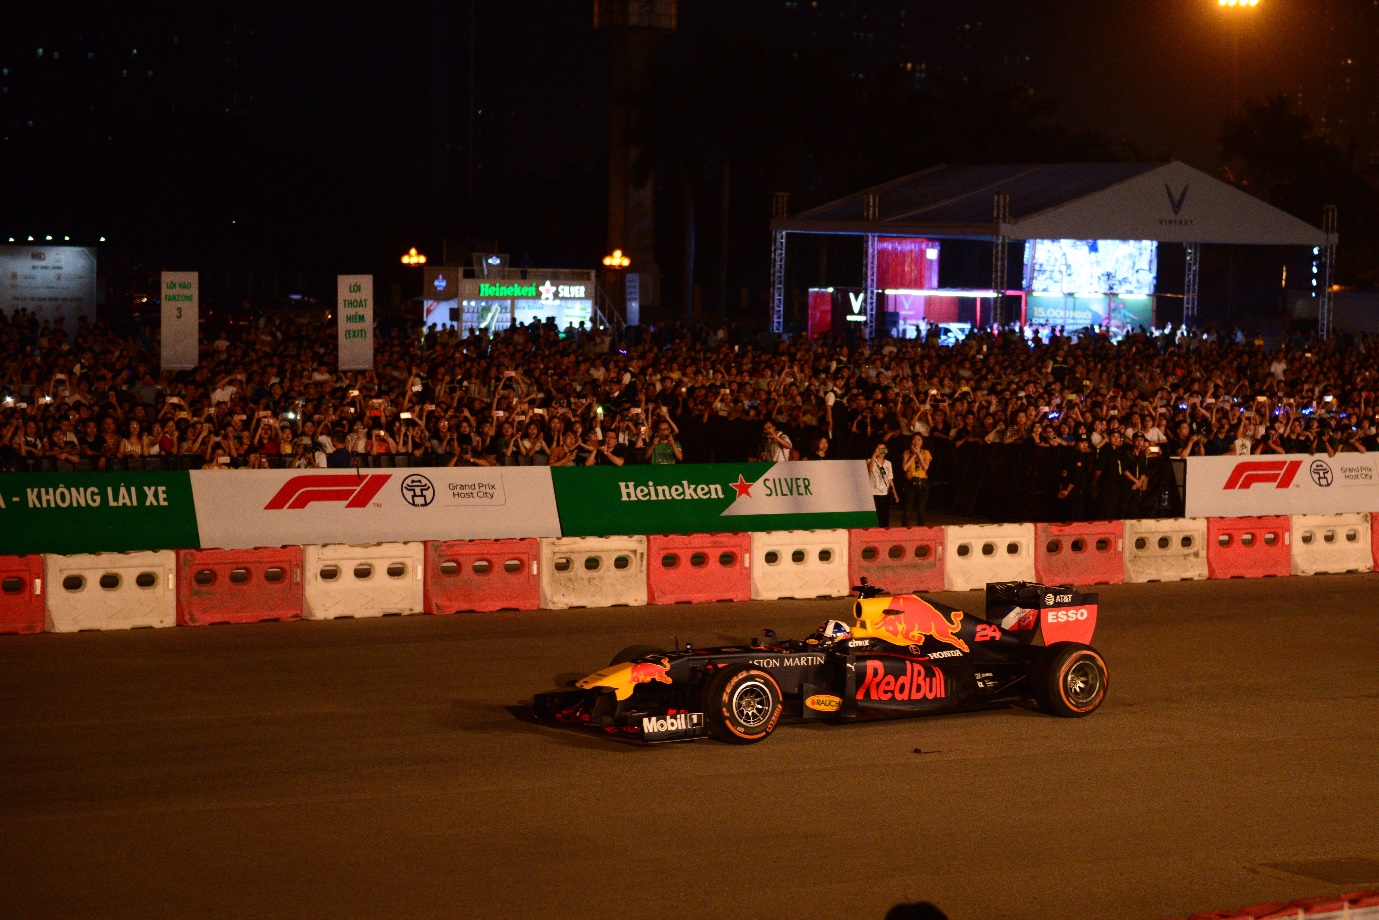 Heineken Silver brings extraordinary F1 experience to Hanoi